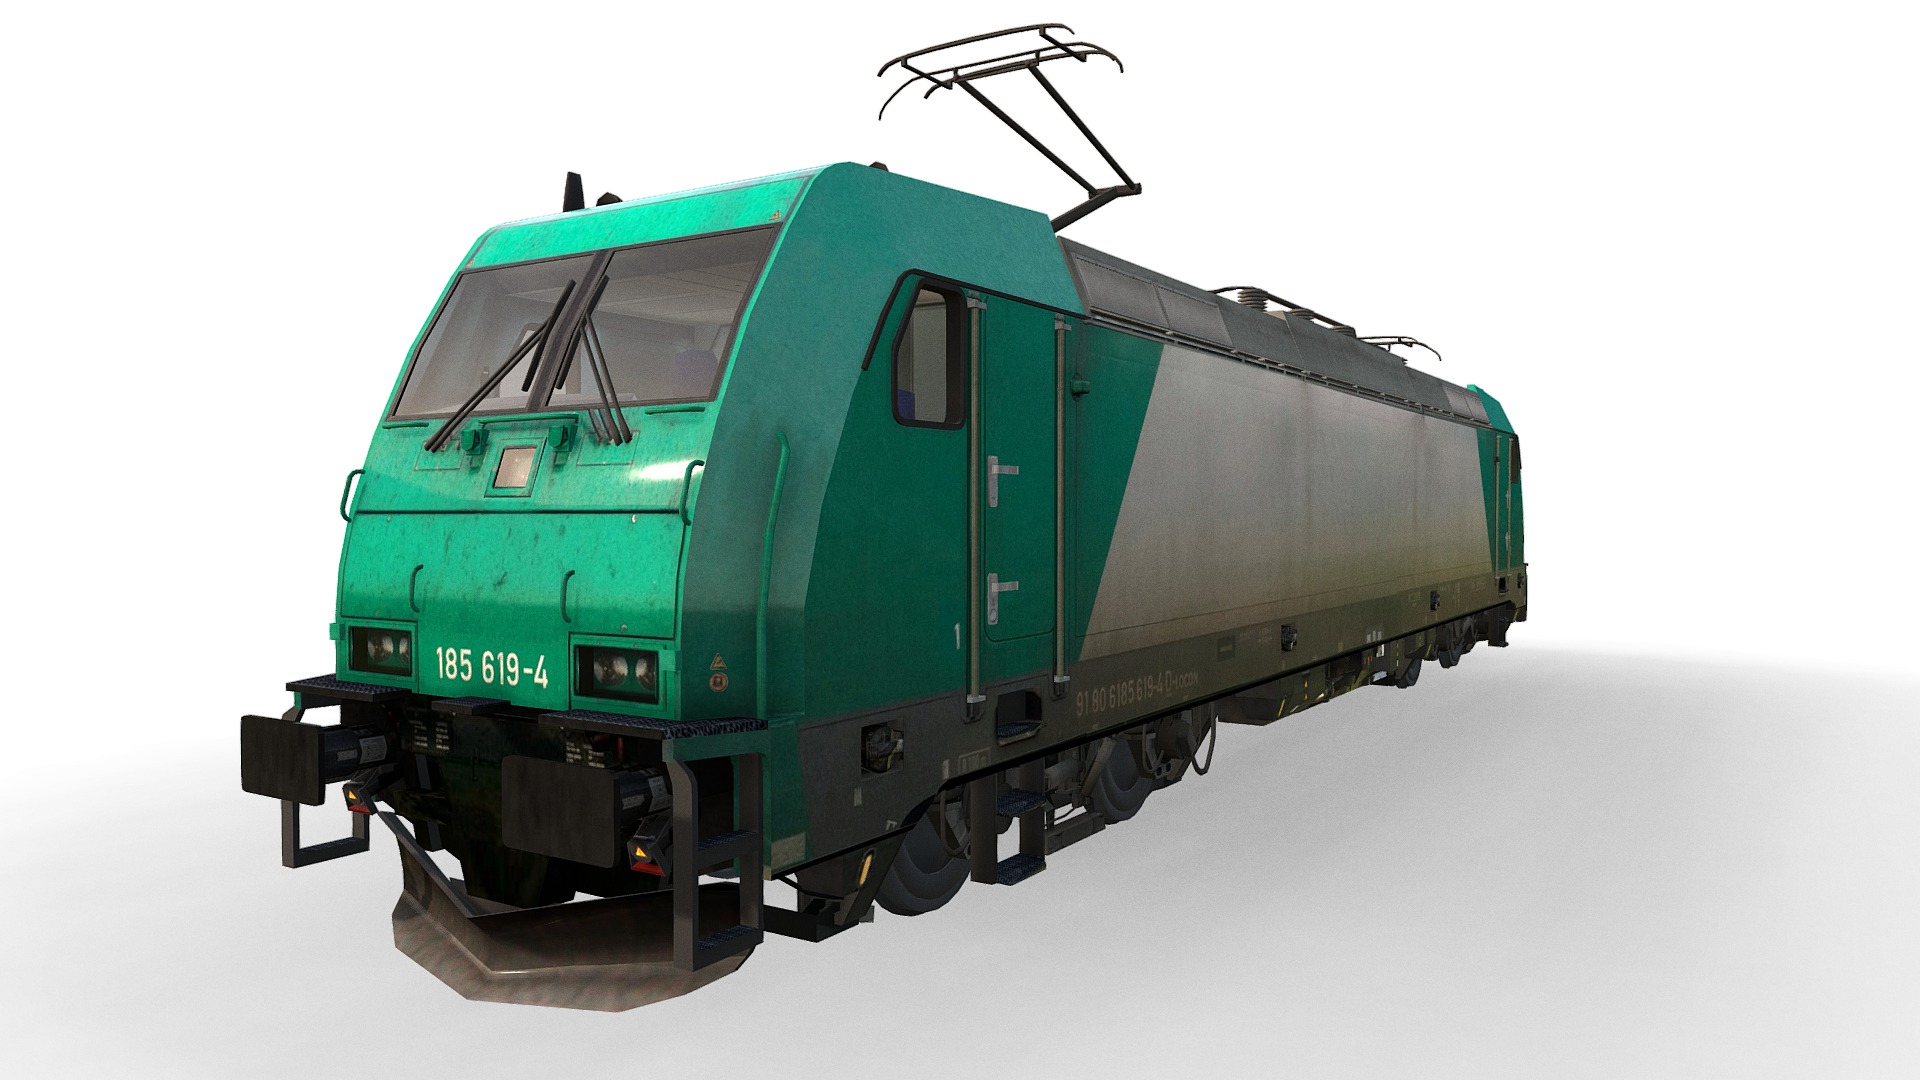 3D model Locomotive Class 185 619-4 – LOCON - This is a 3D model of the Locomotive Class 185 619-4 - LOCON. The 3D model is about a green train car.